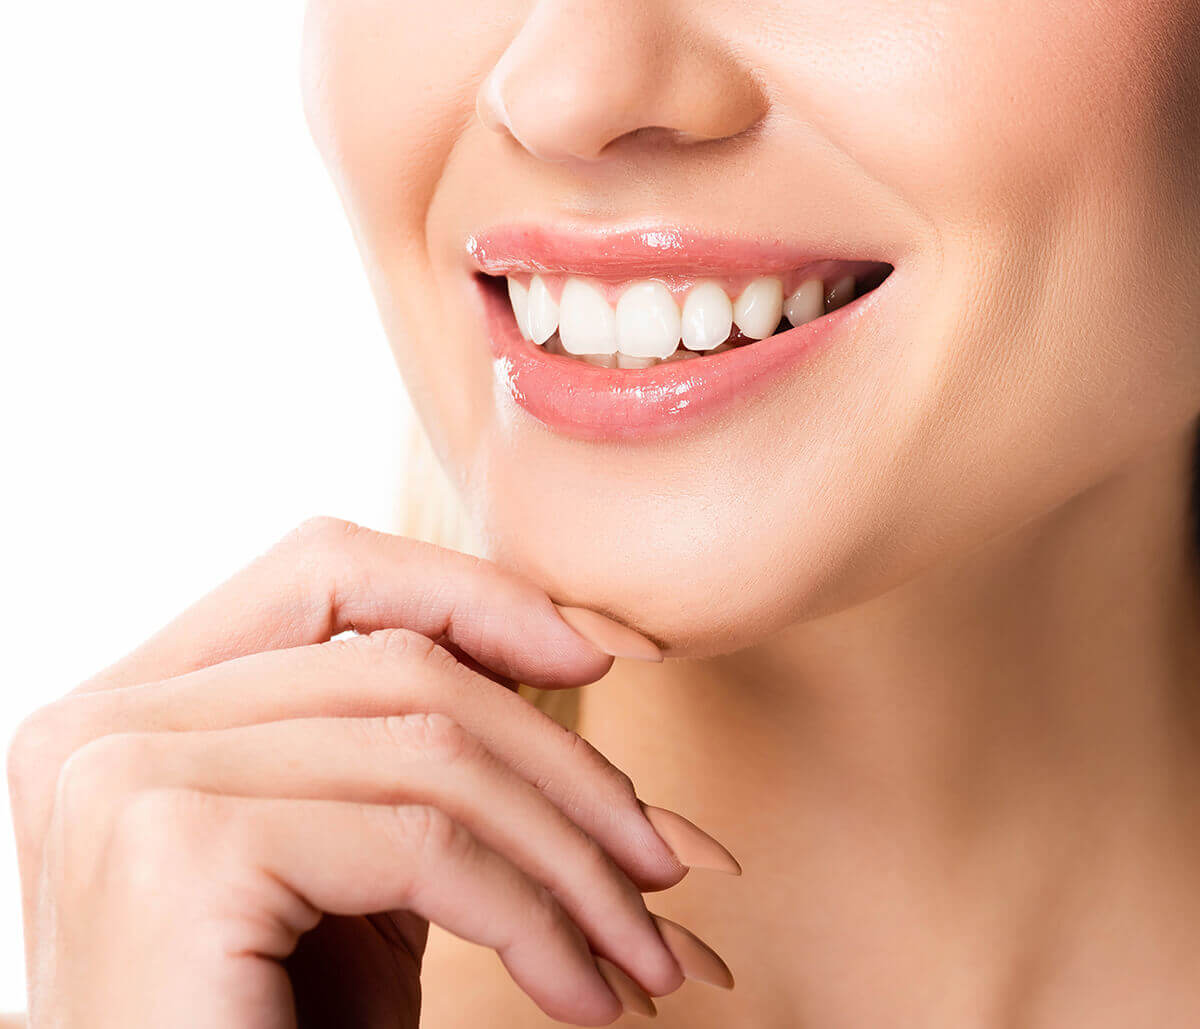 Dentist in Cincinnati, OH offers professional teeth whitening options